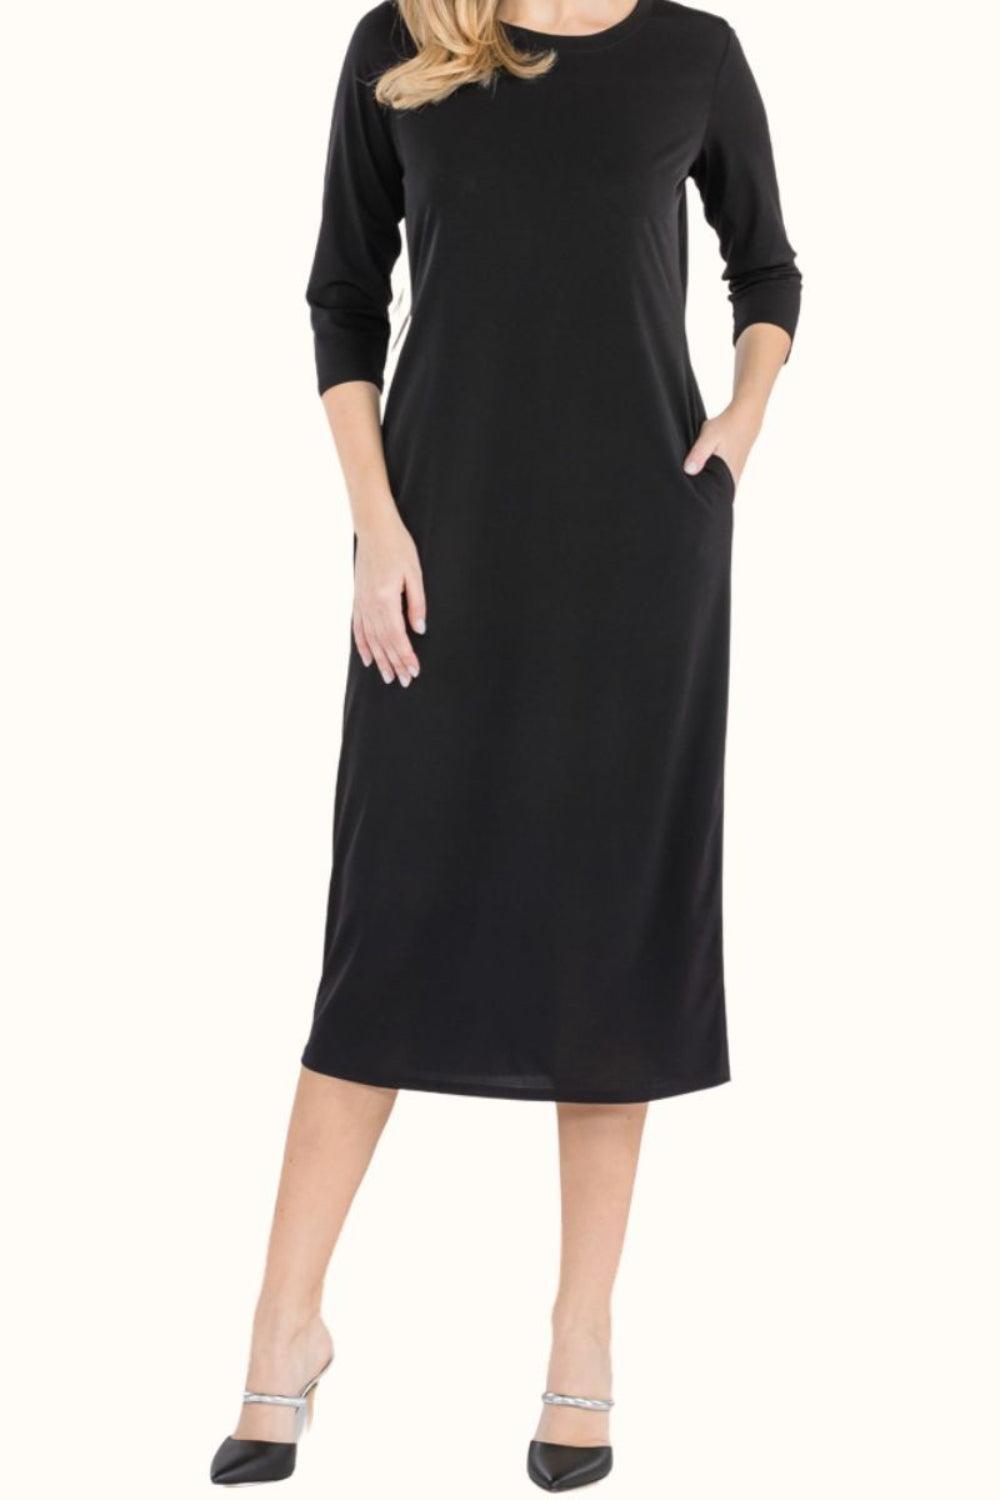 Celeste Full Size Round Neck Midi Dress - AMIClubwear